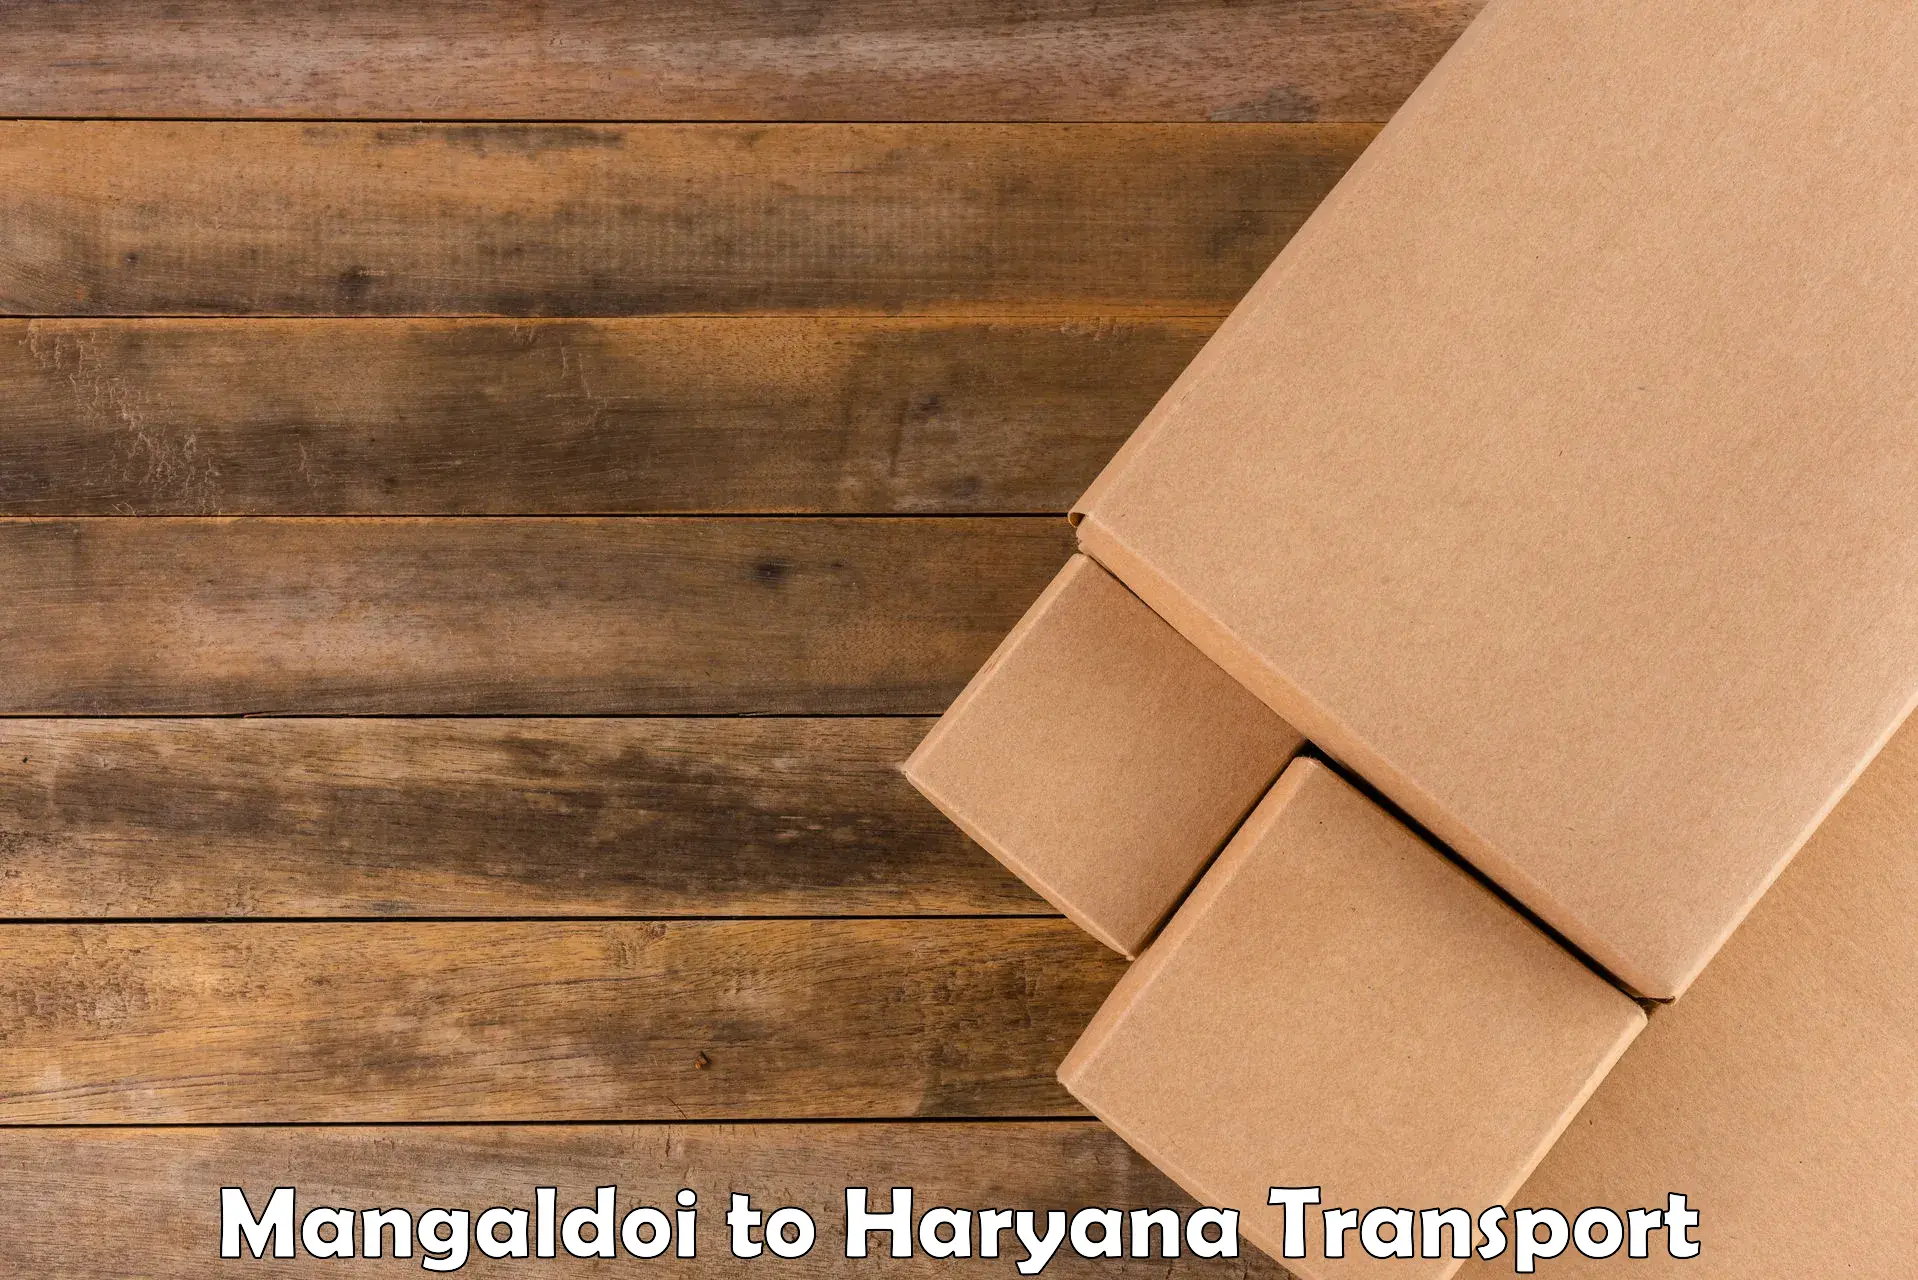 Bike shipping service Mangaldoi to Gurgaon